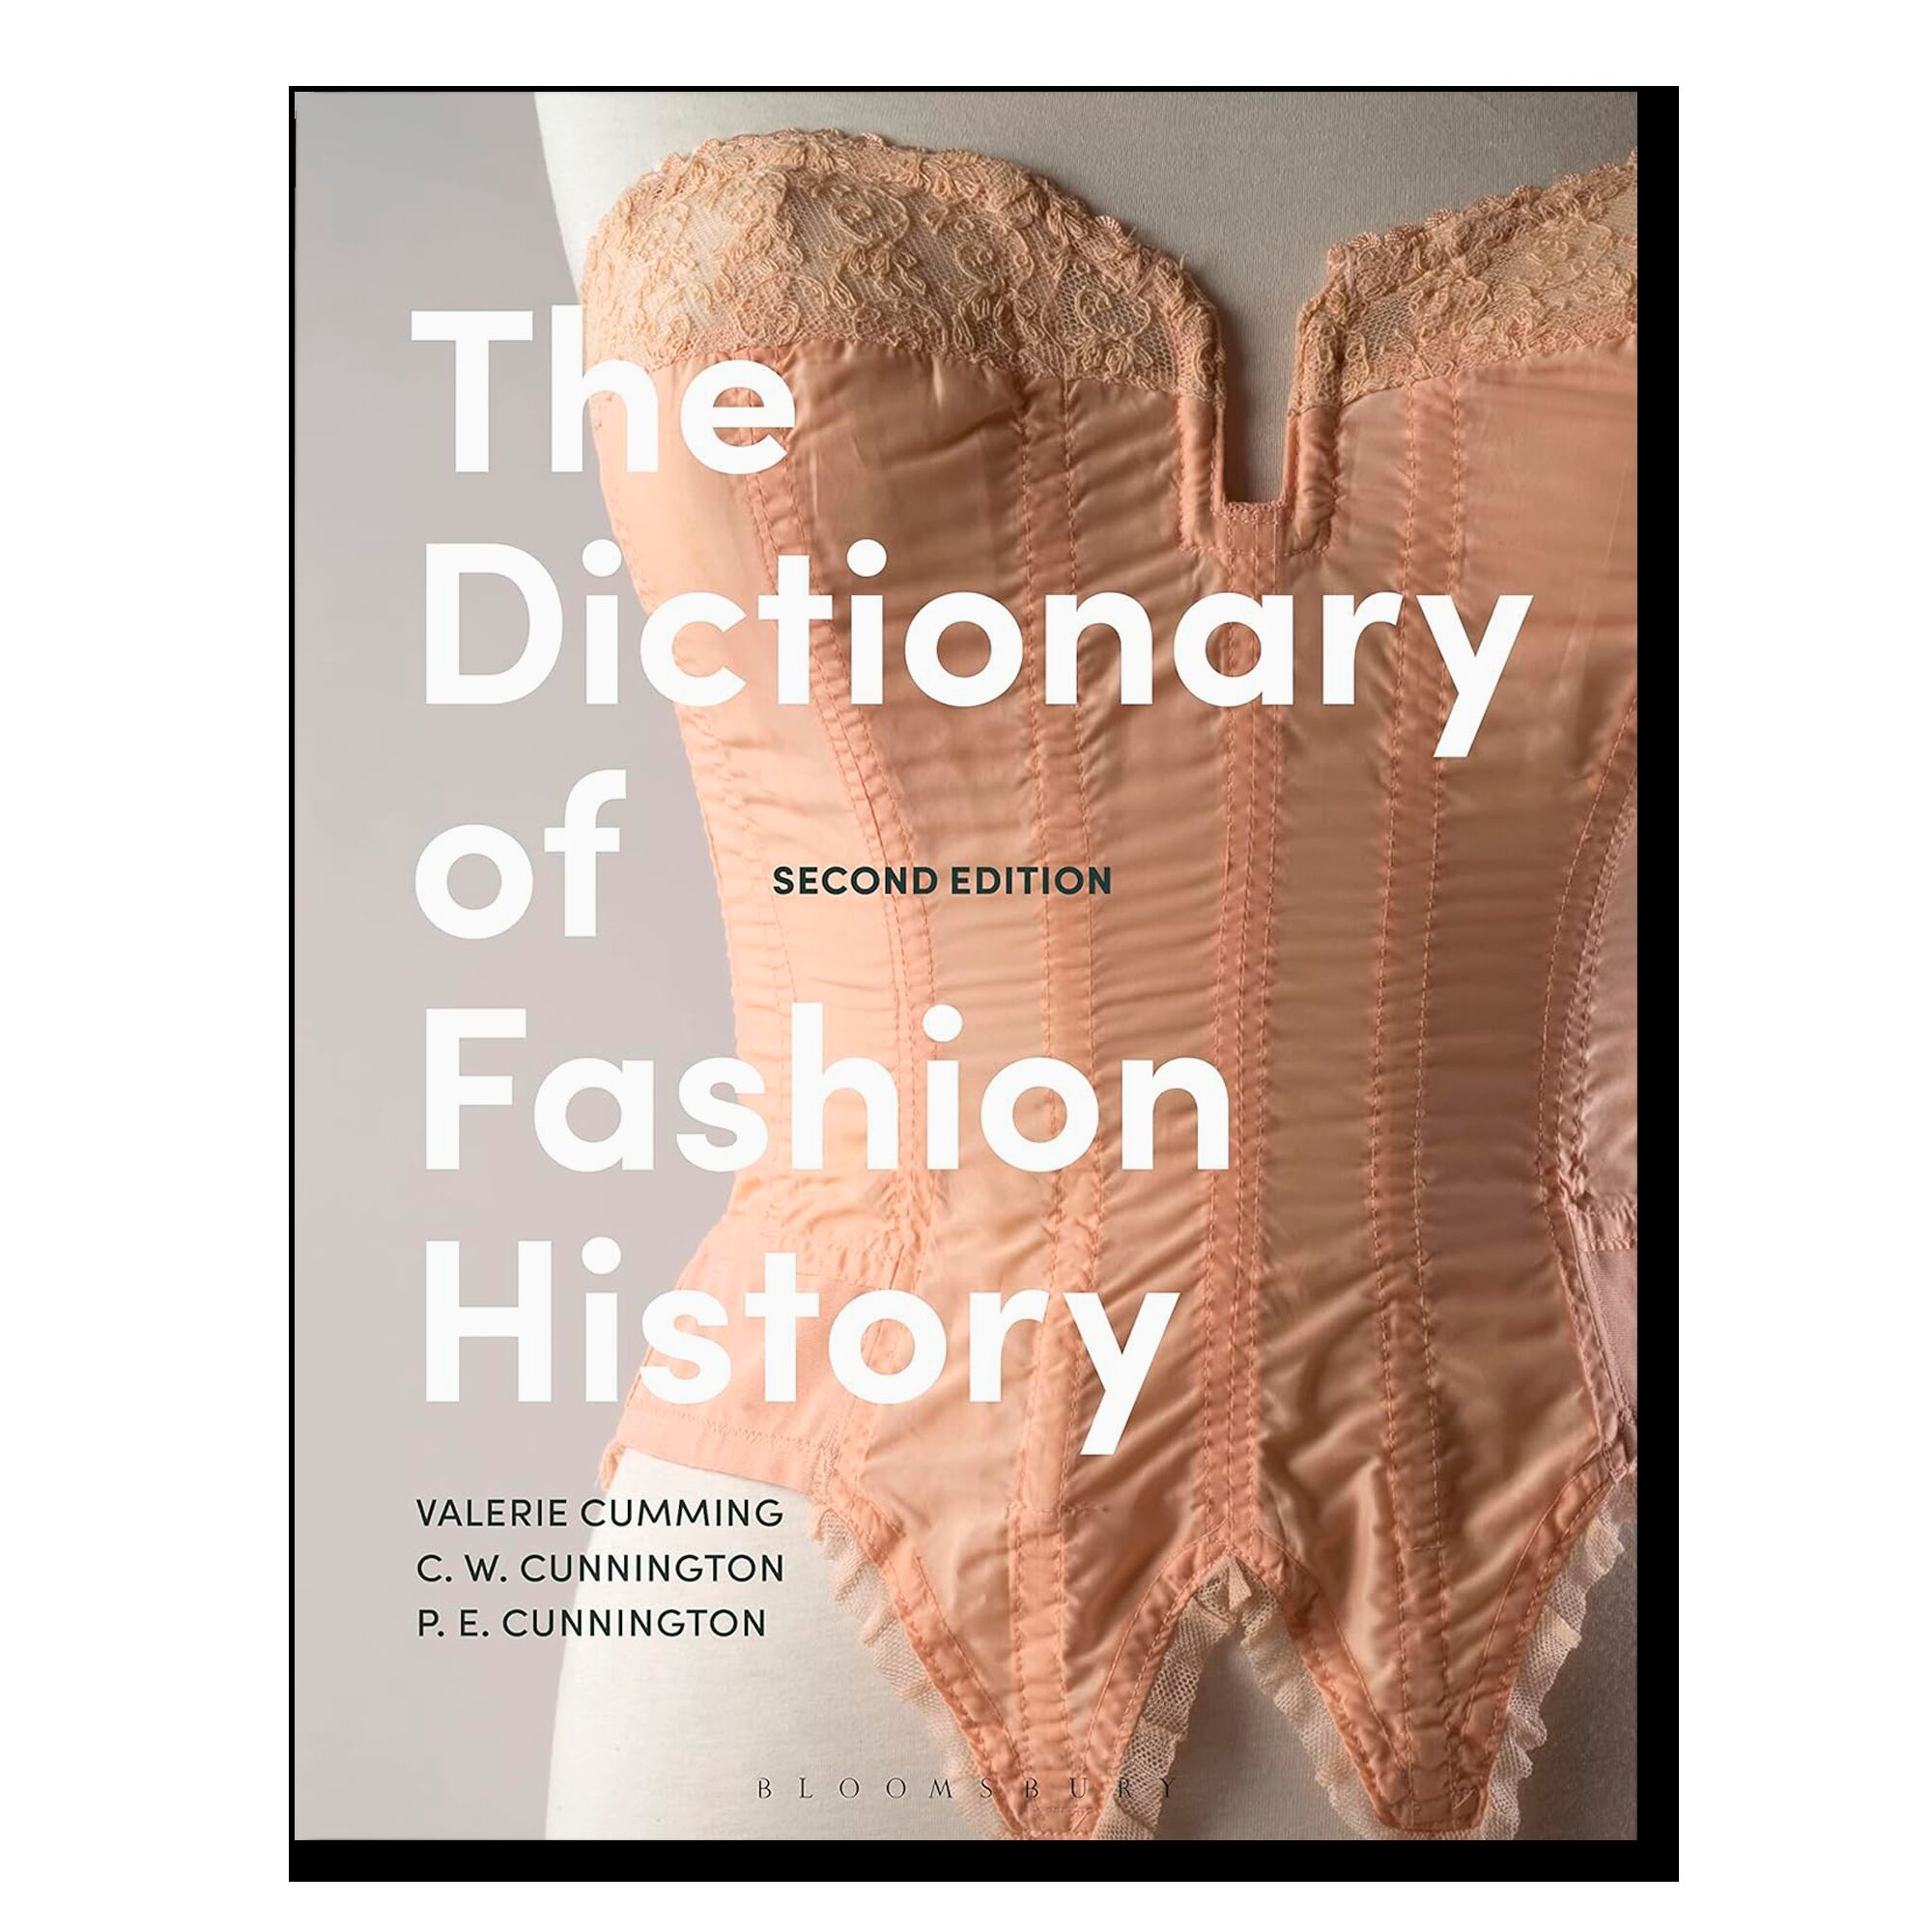 Dictionary of Fashion History